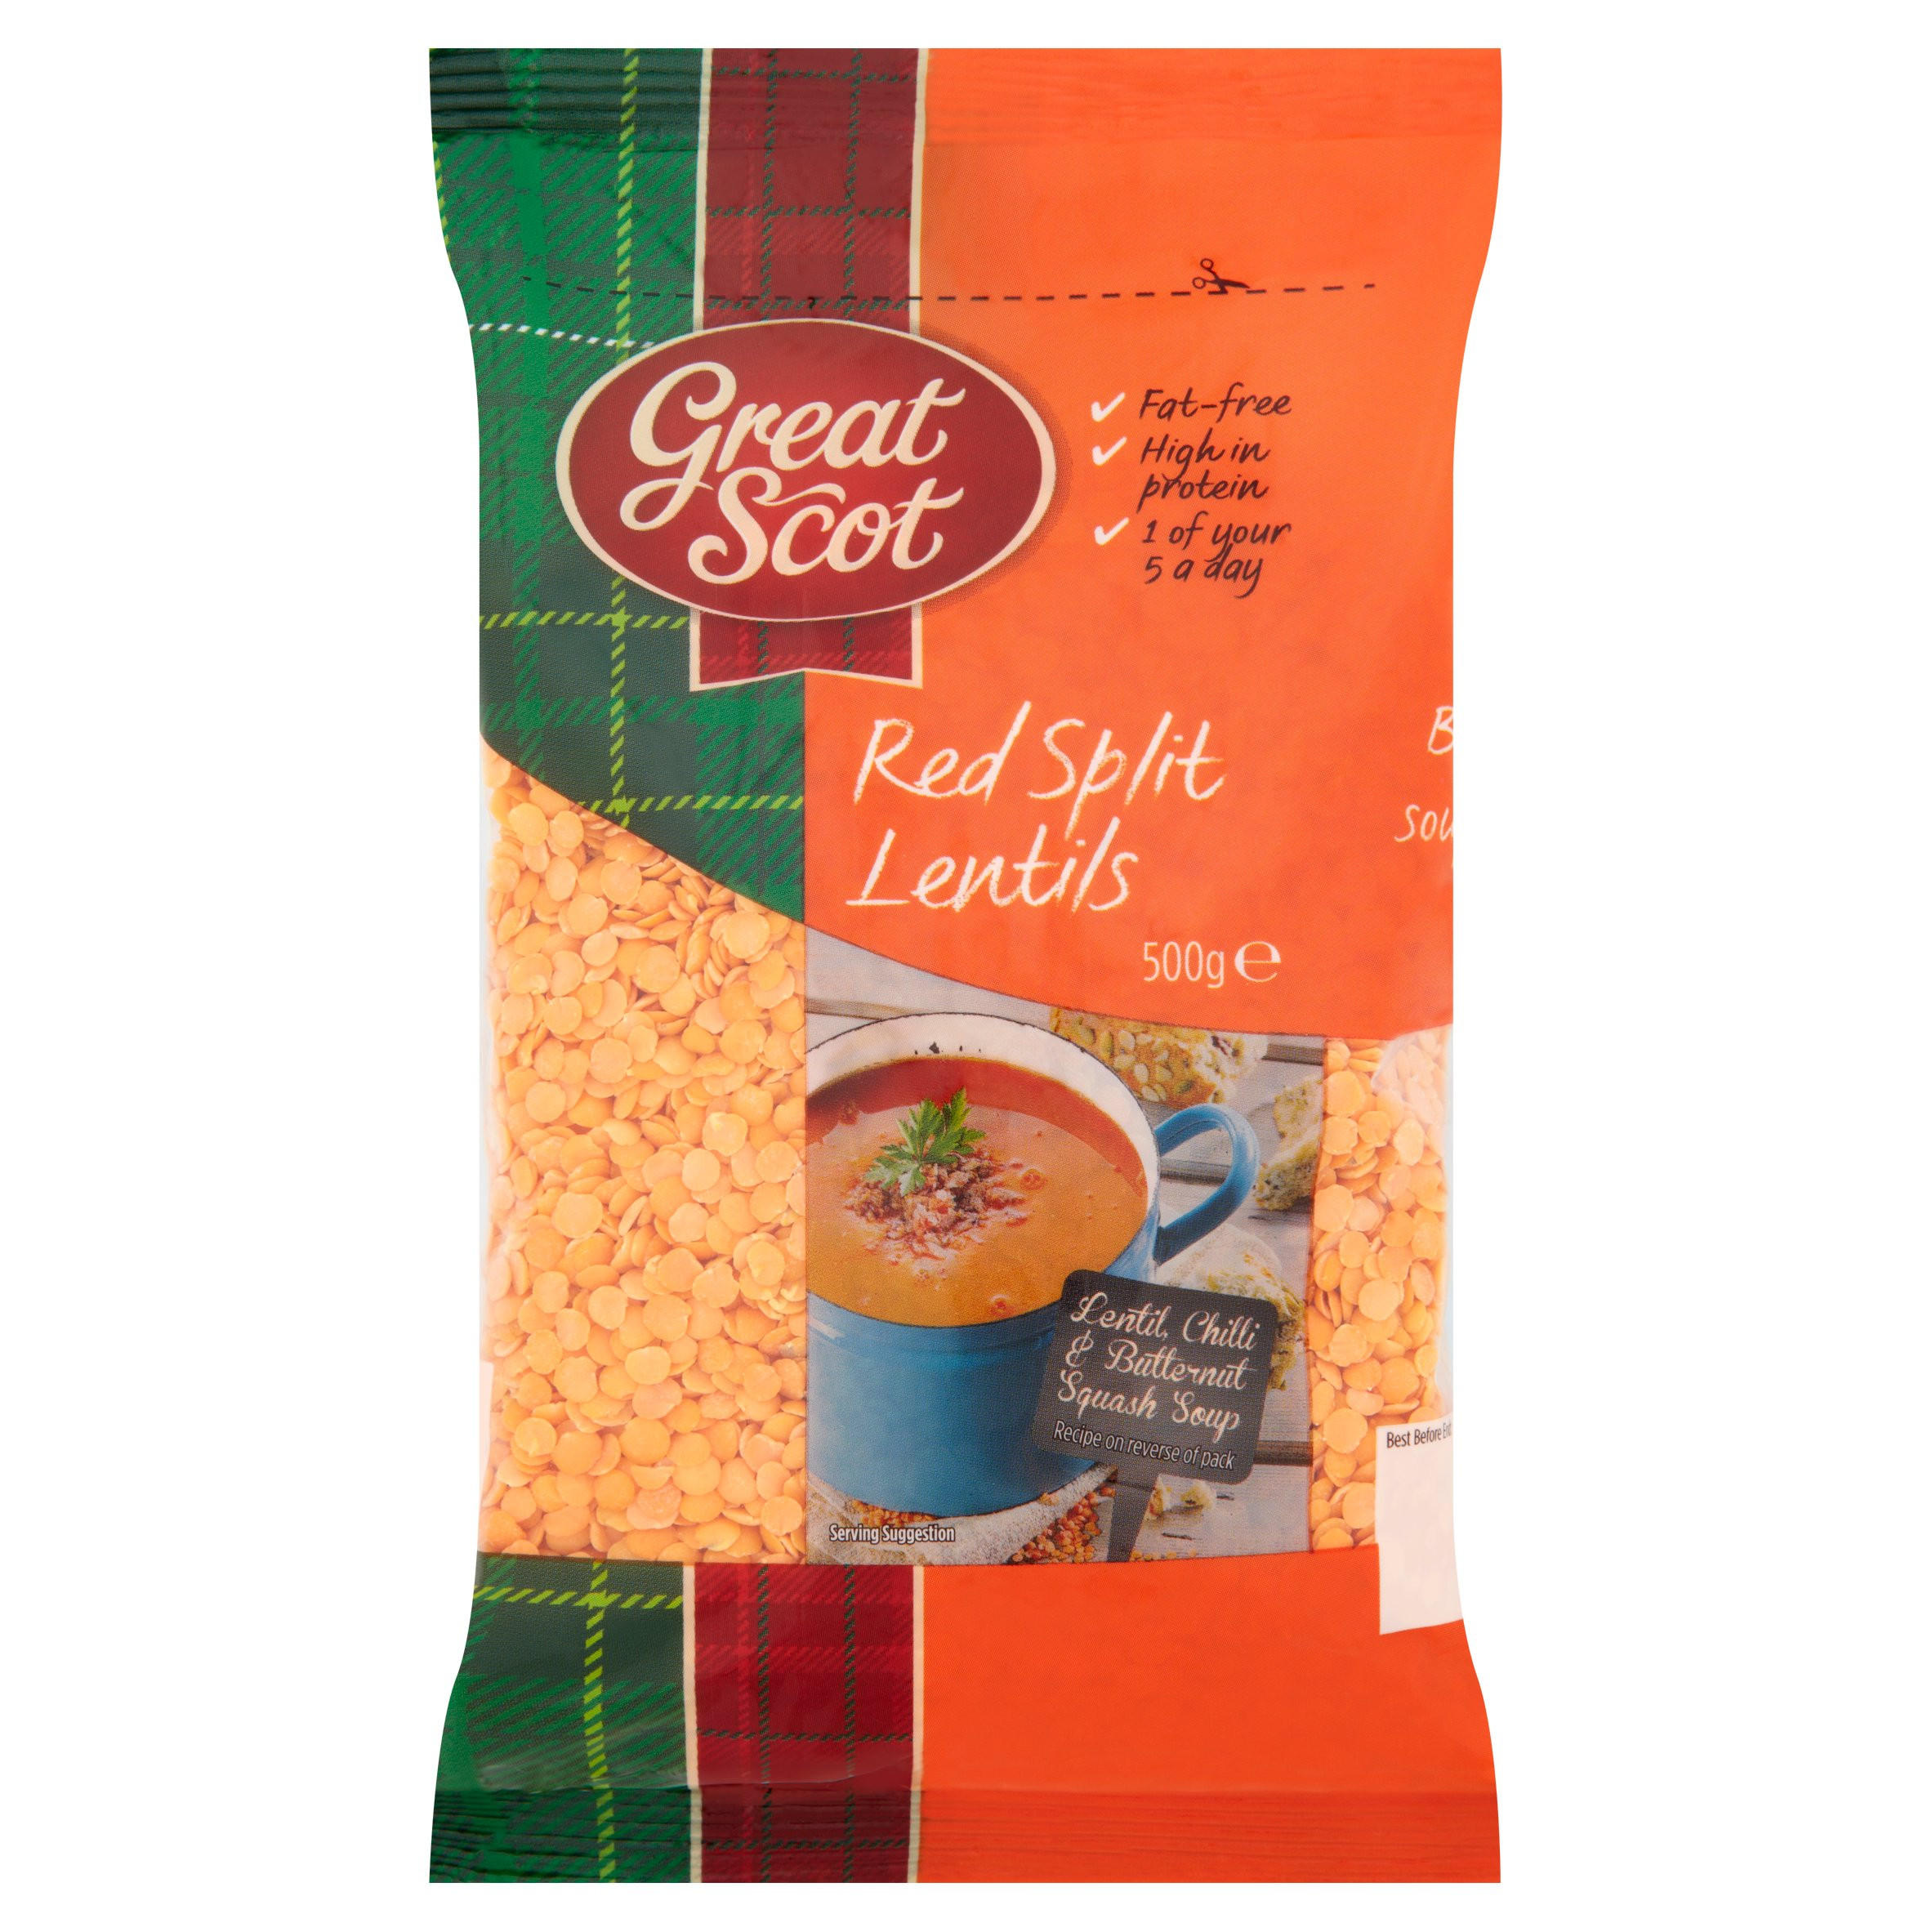 Great Scot Red Split Lentils 500g | Rice, Grains & Pulses | Iceland Foods